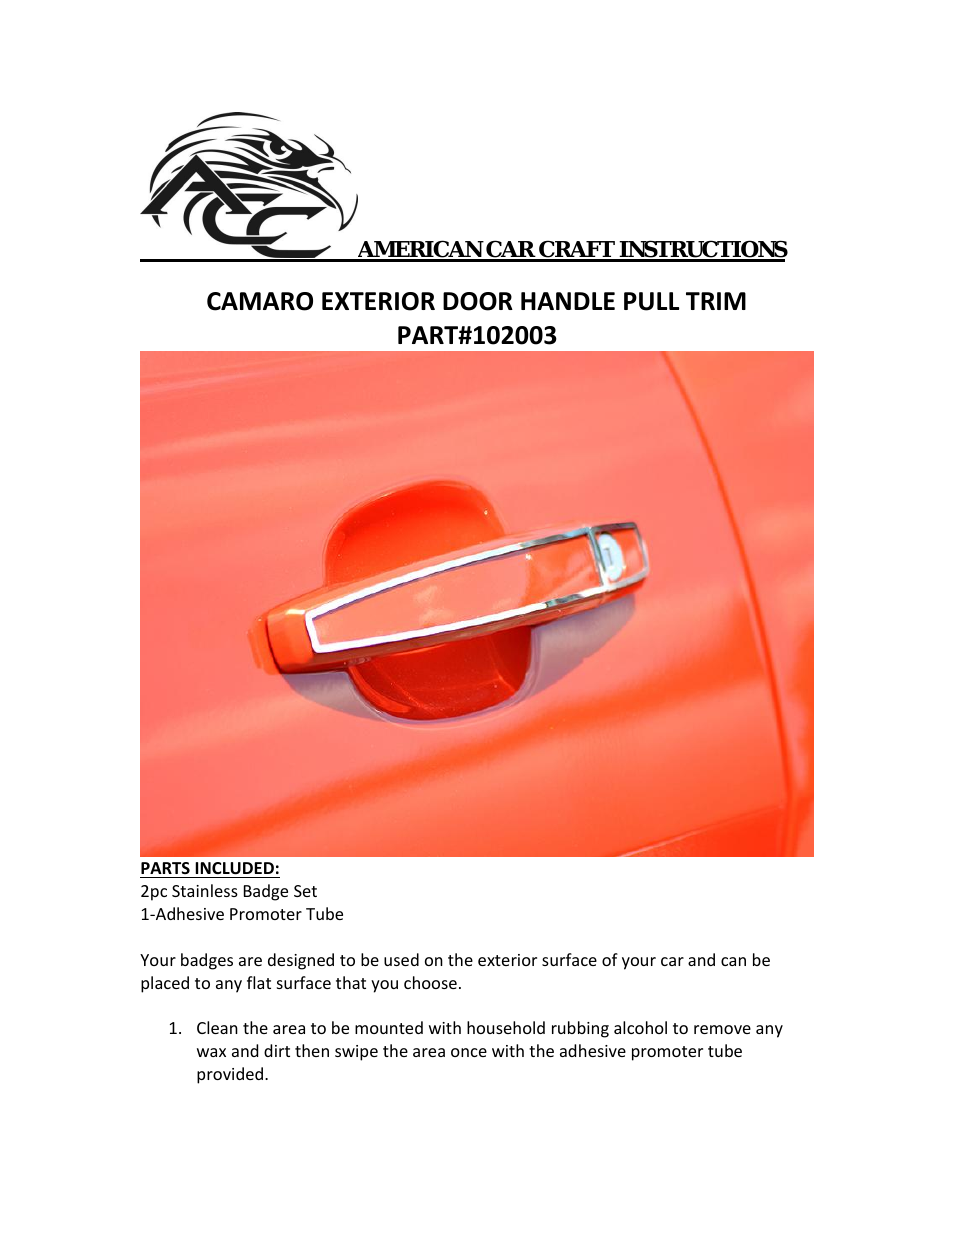 Camaro Door Handle Trim Polished Exterior 2Pc 2010-2013